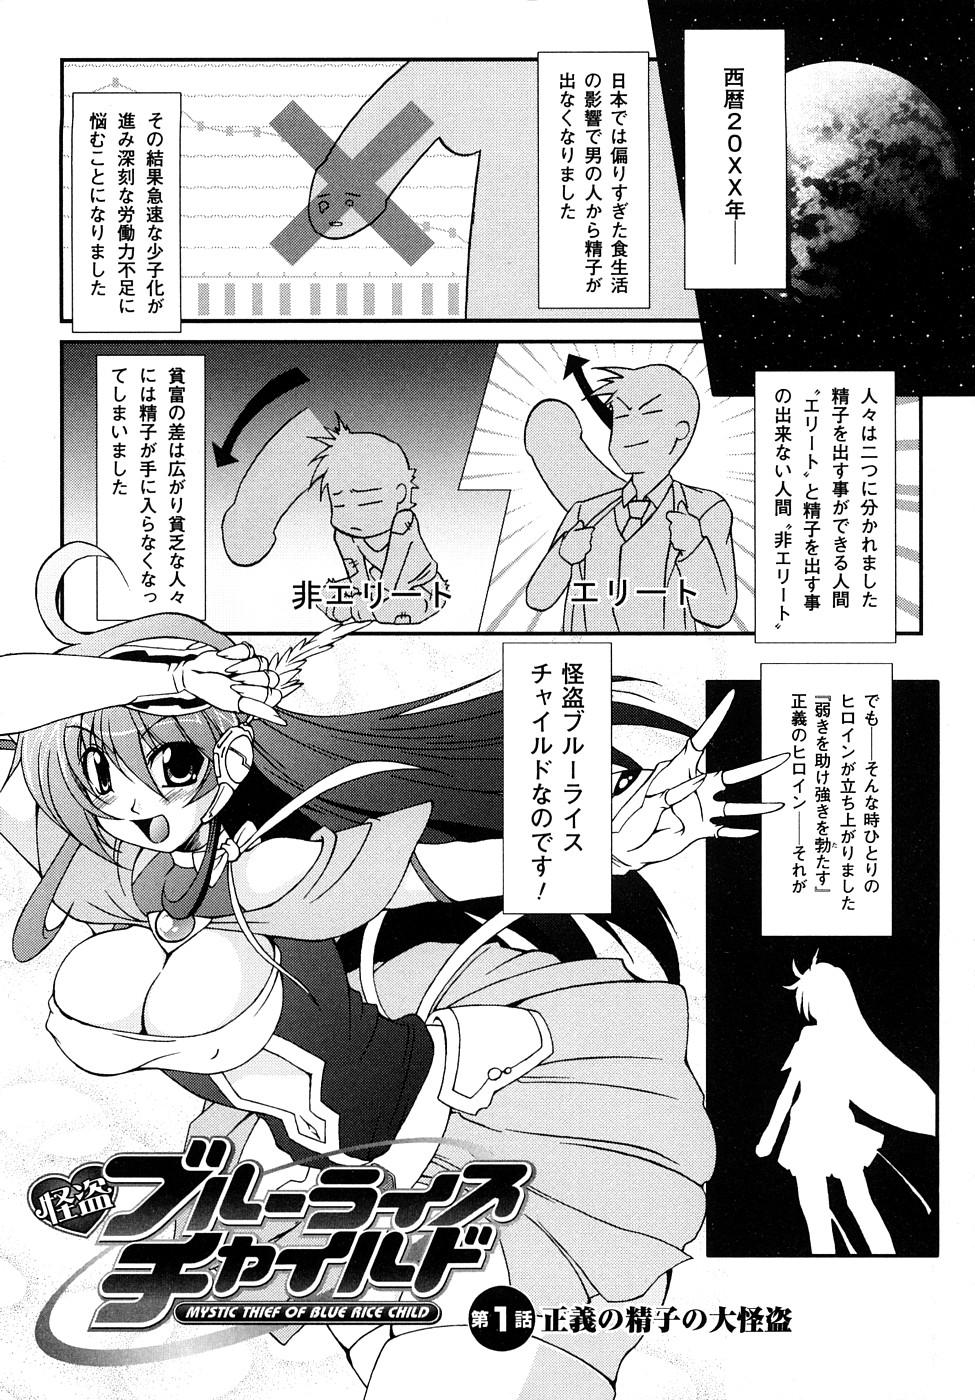 Double Kaitou Blue Rice Child Stranger - Page 10